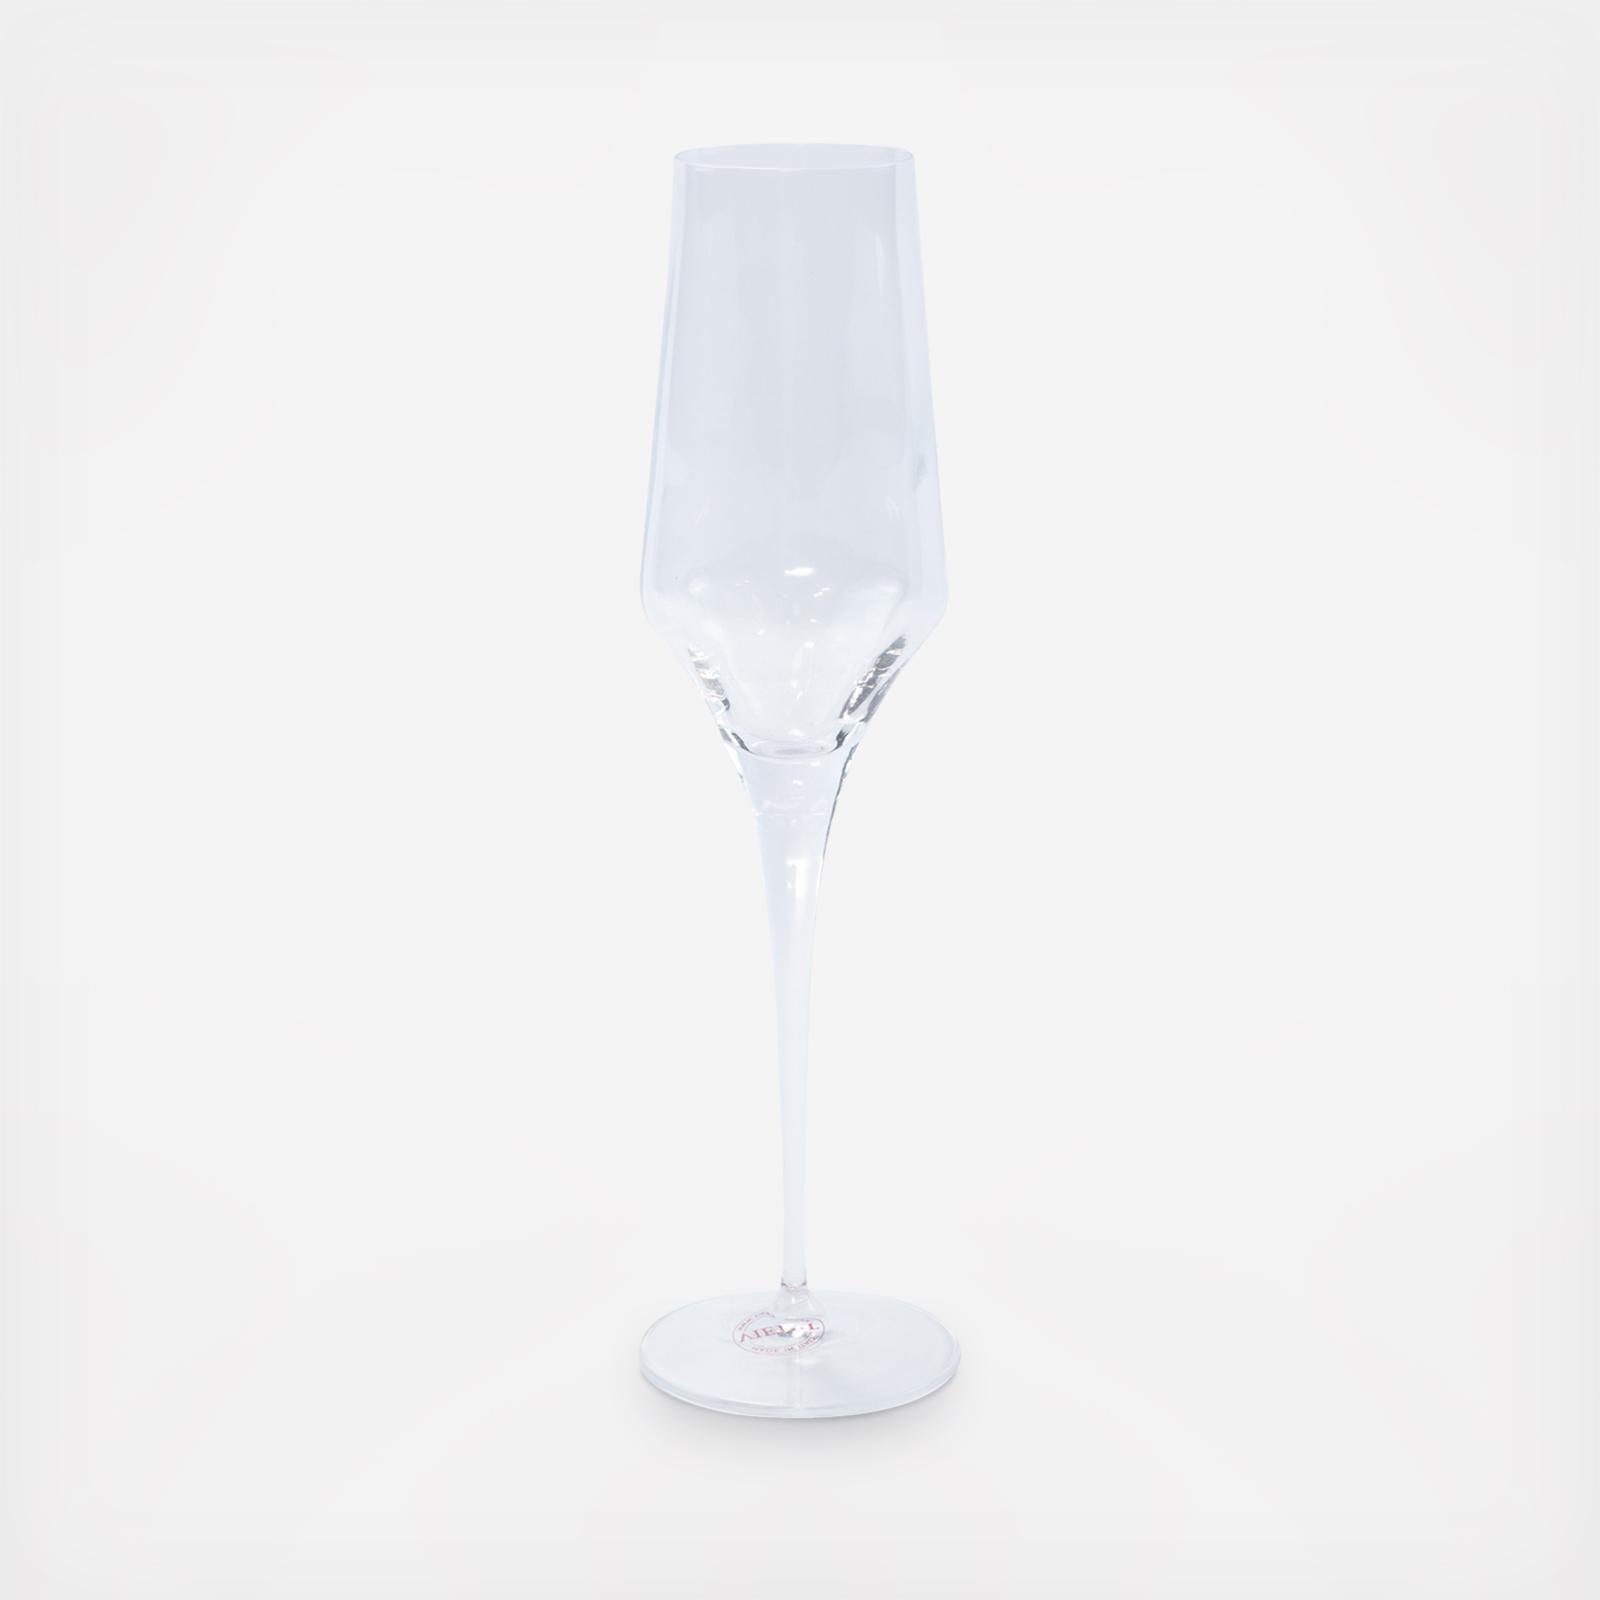 Vietri Contessa Assorted Wine Glasses - Set of 4